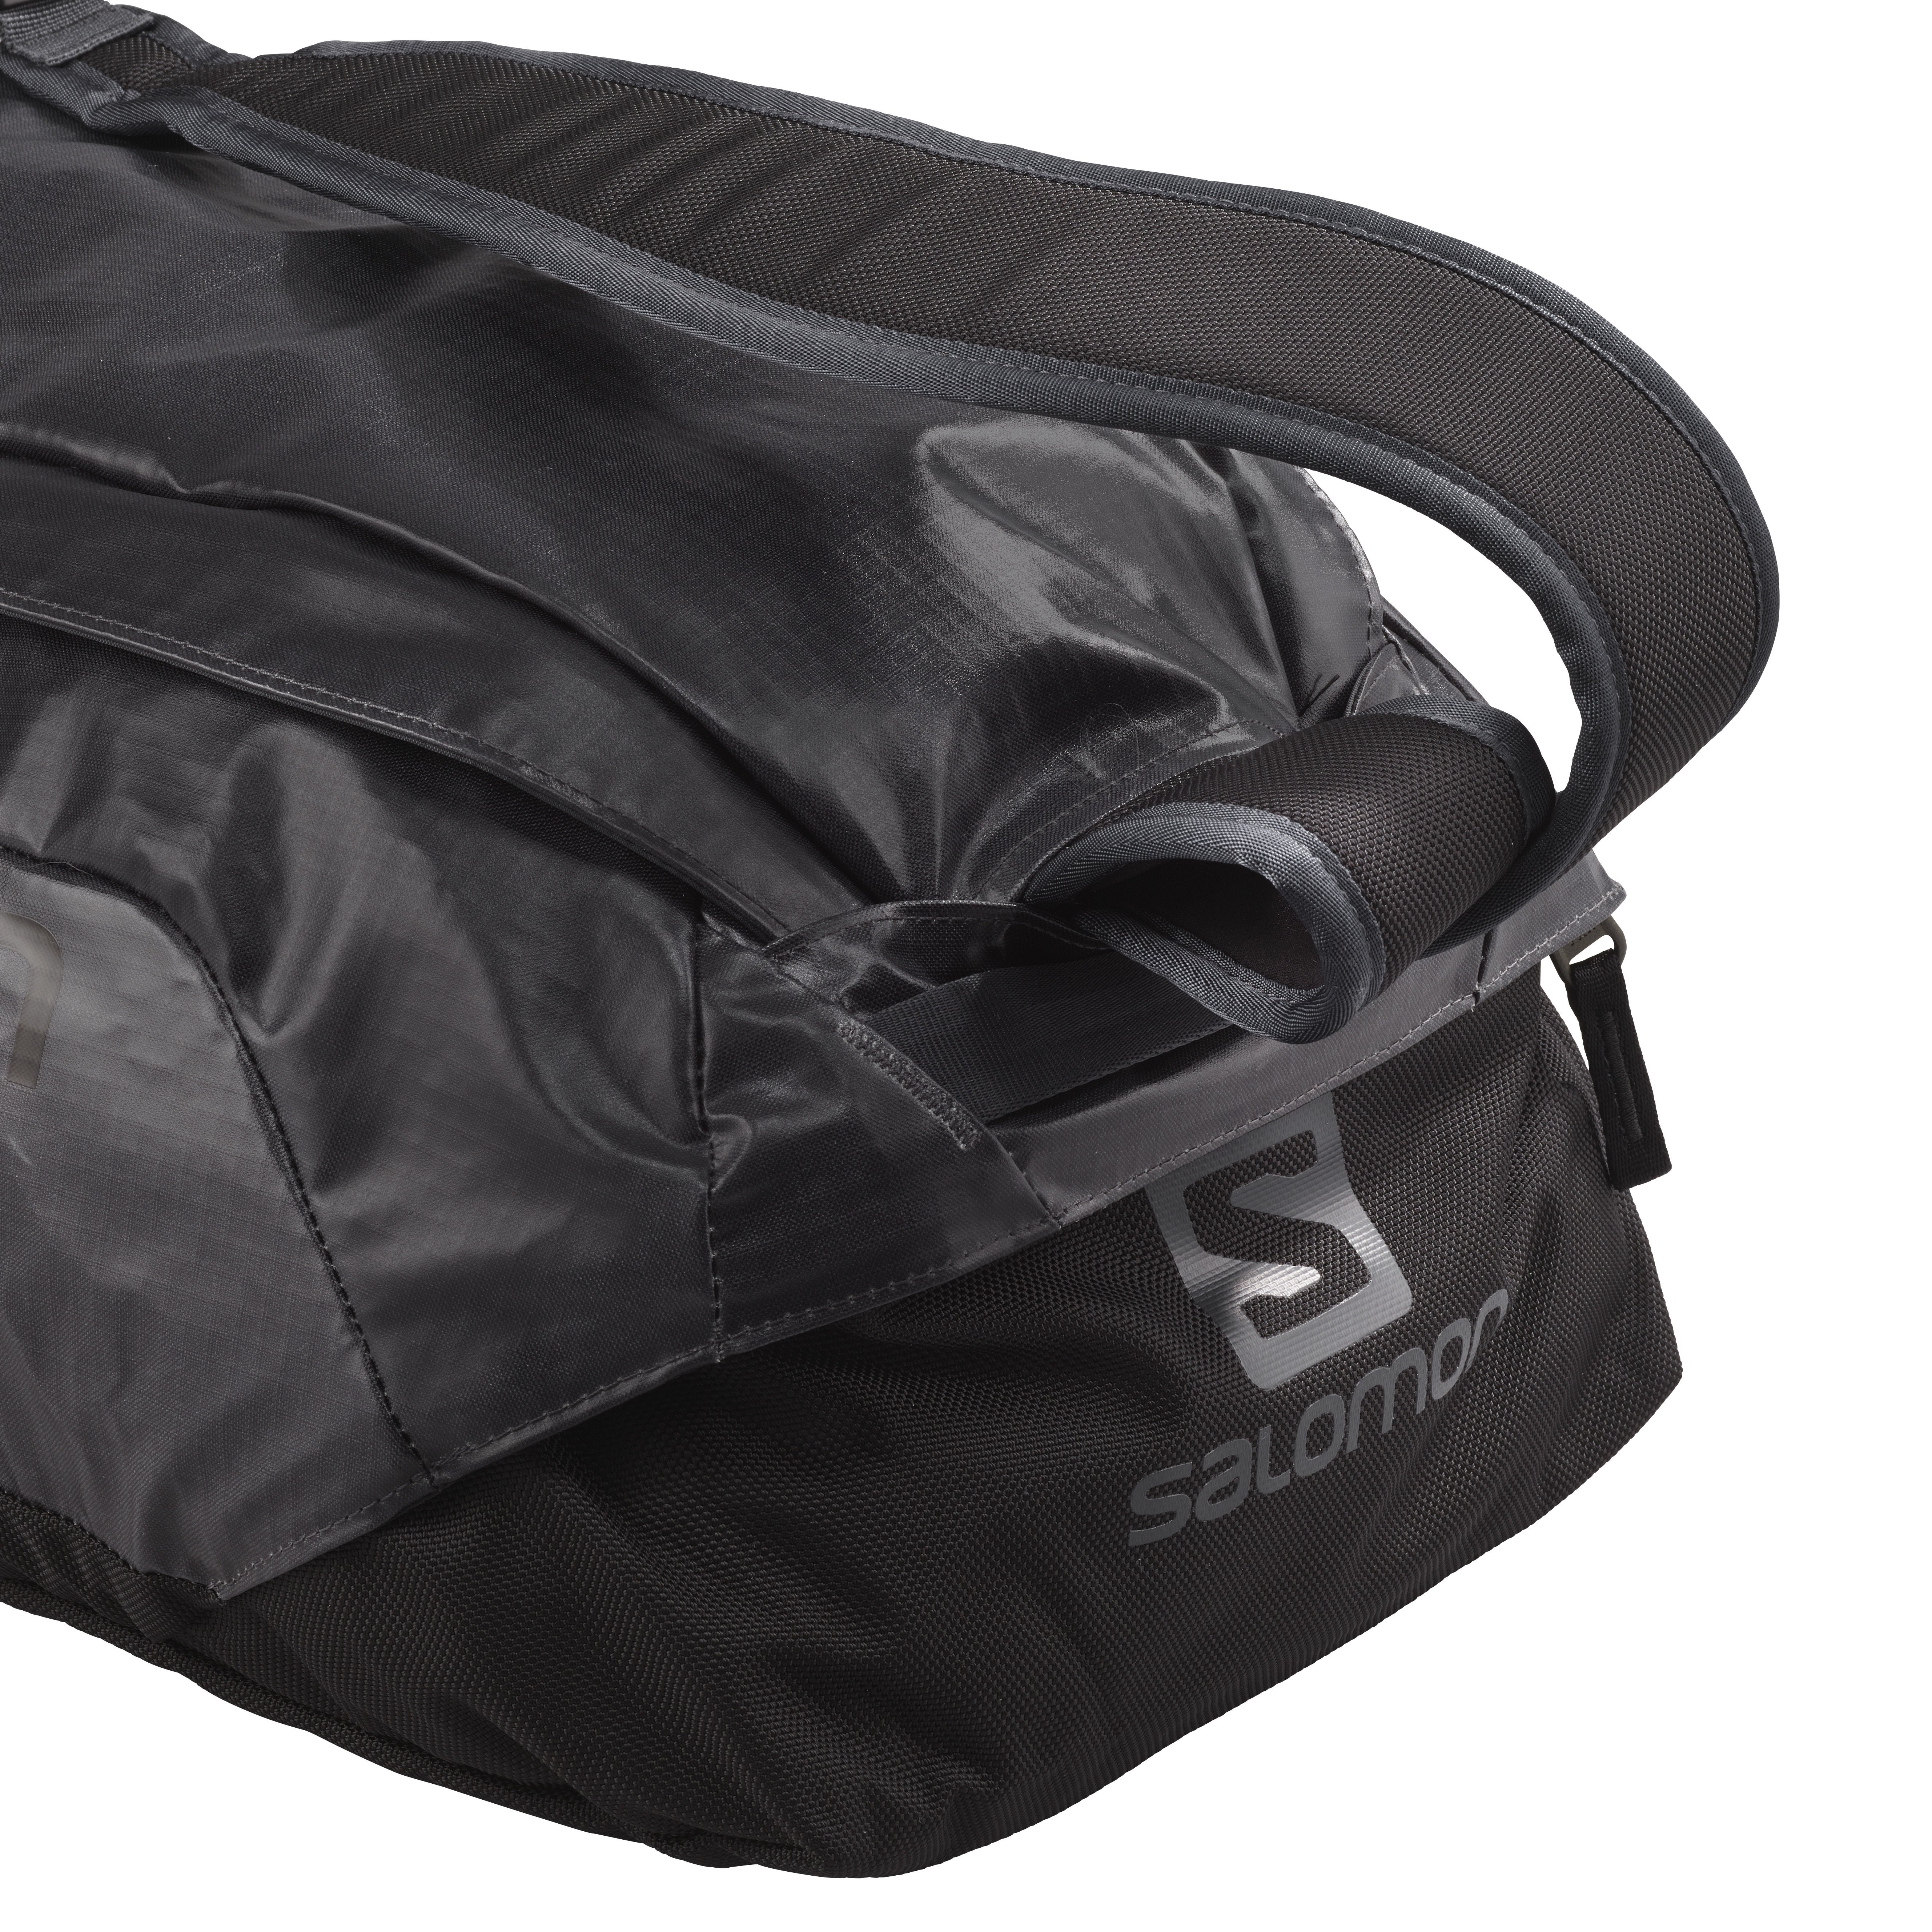 Cestovná taška Salomon OUTLIFE DUFFEL 25 - sivá/čierna